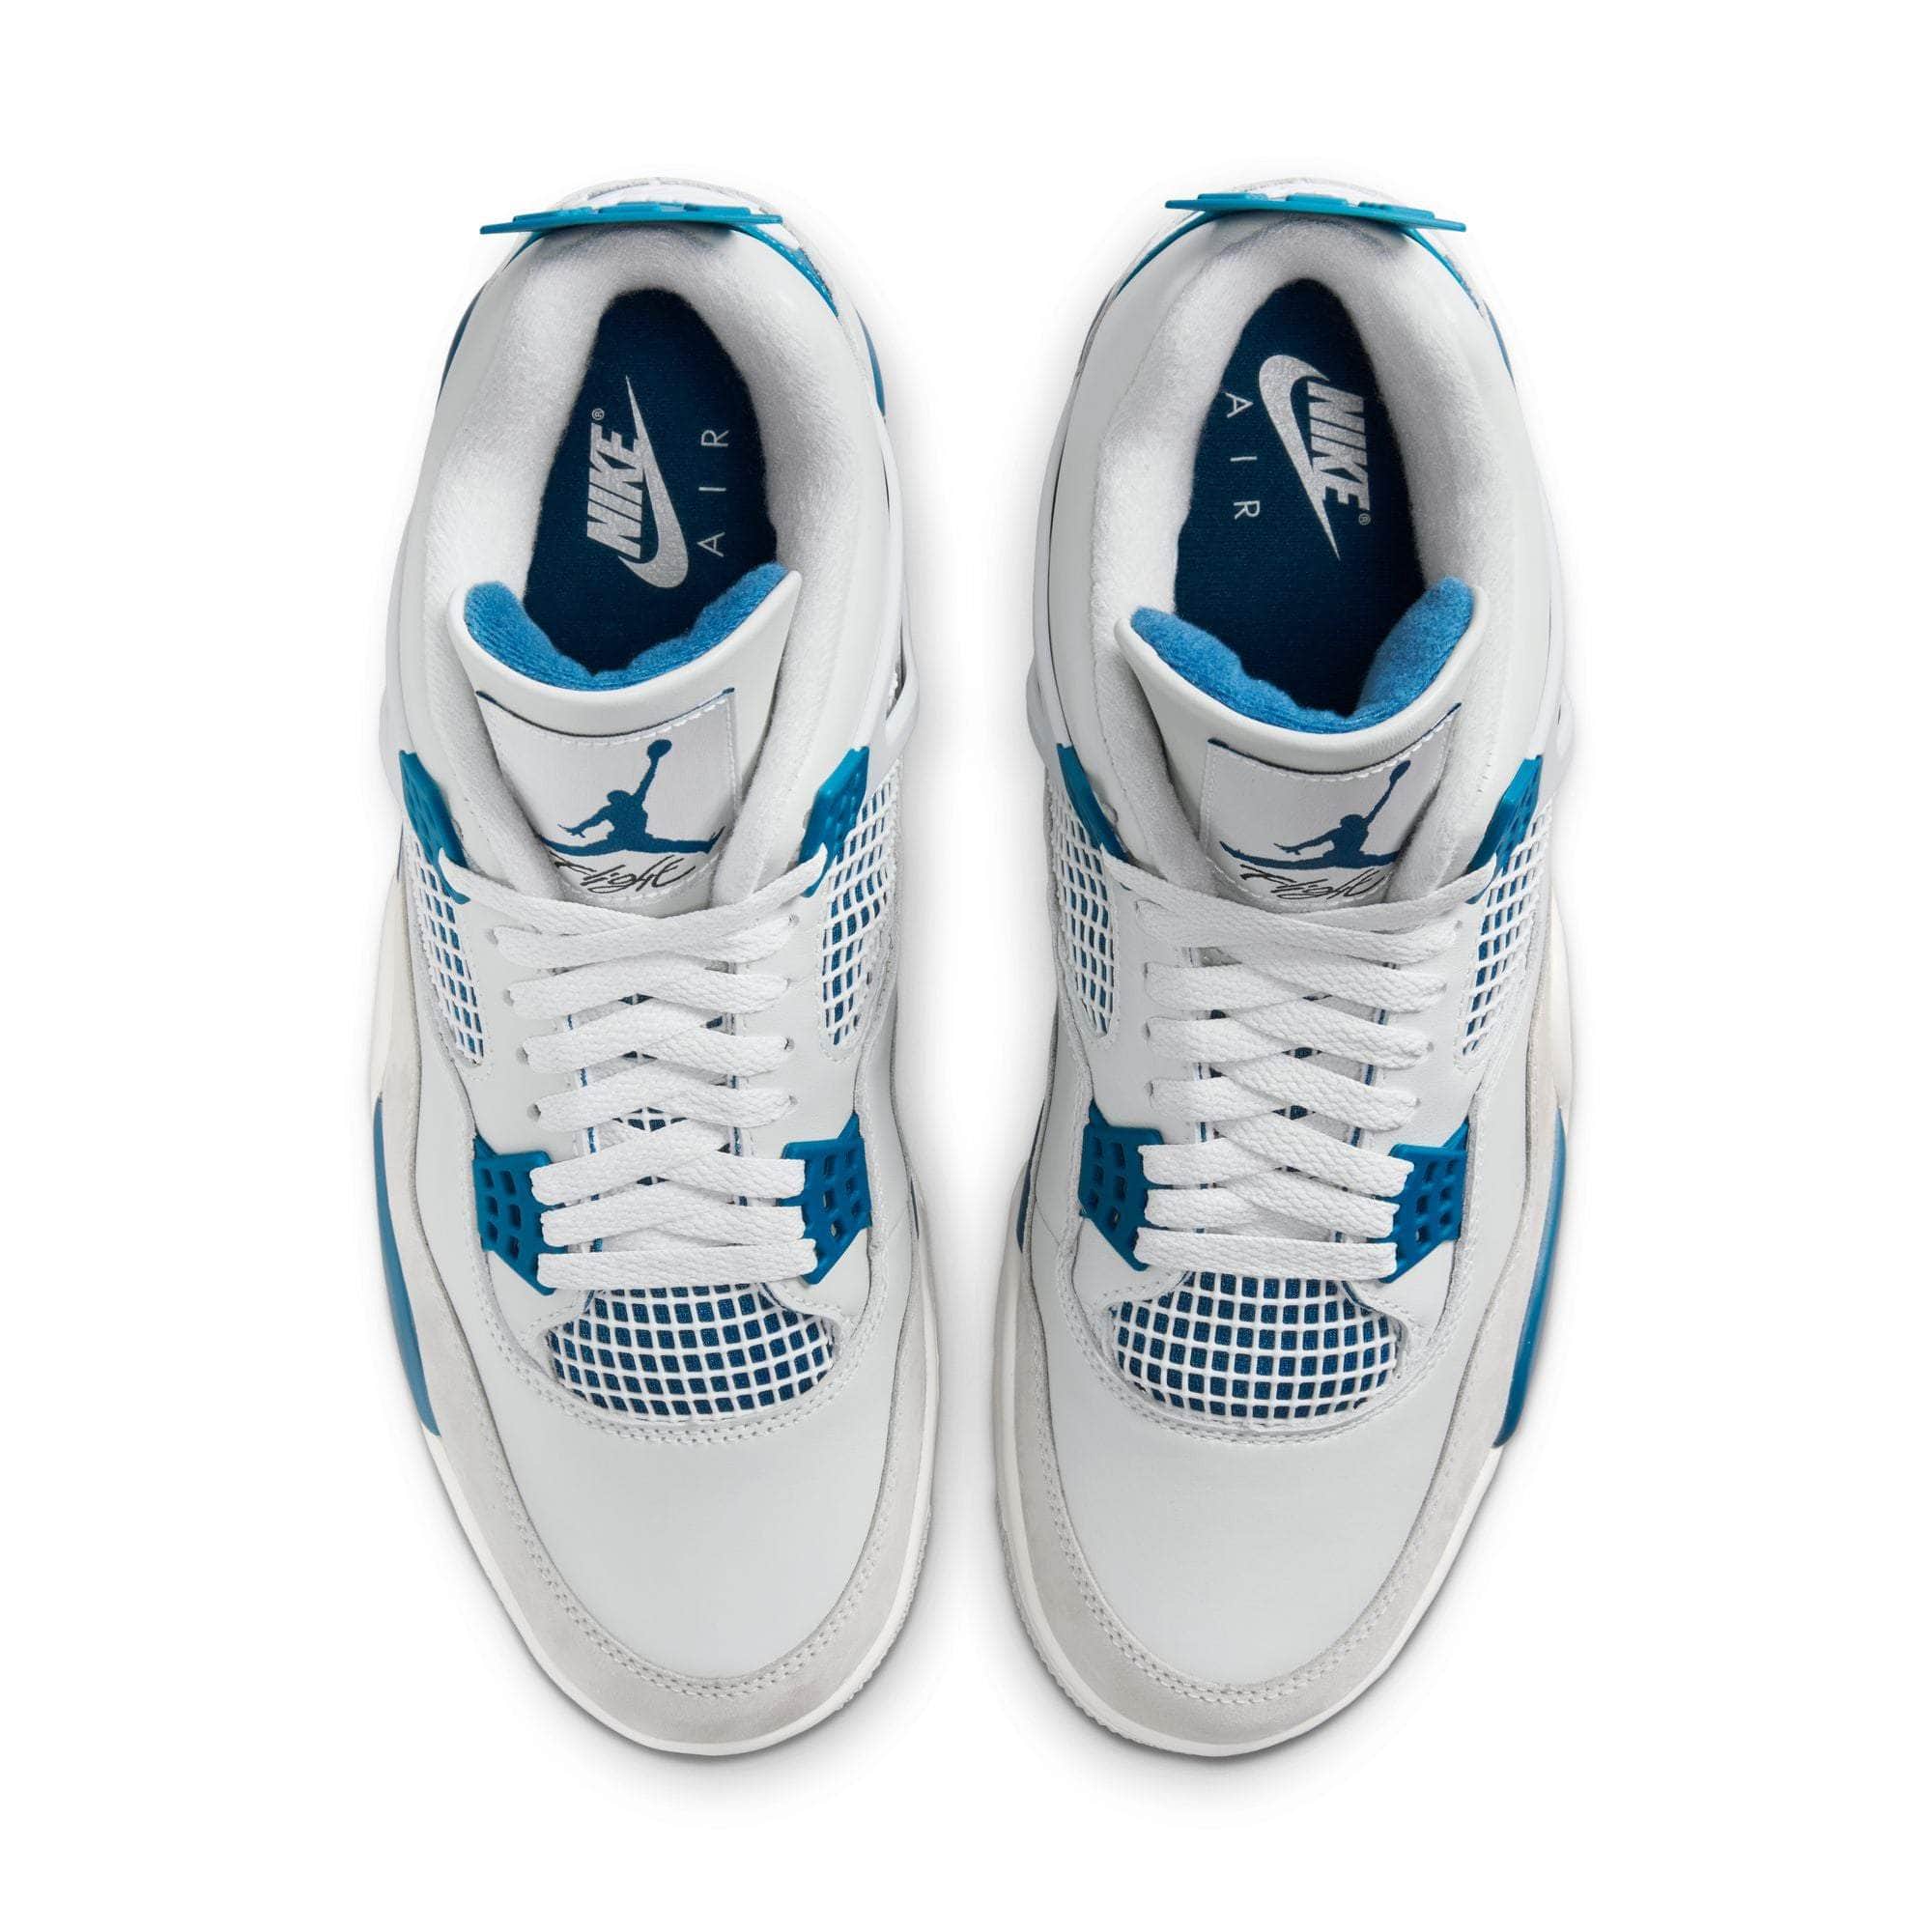 Air Jordan Footwear Air Jordan 4 Retro "Military Blue" - Men's